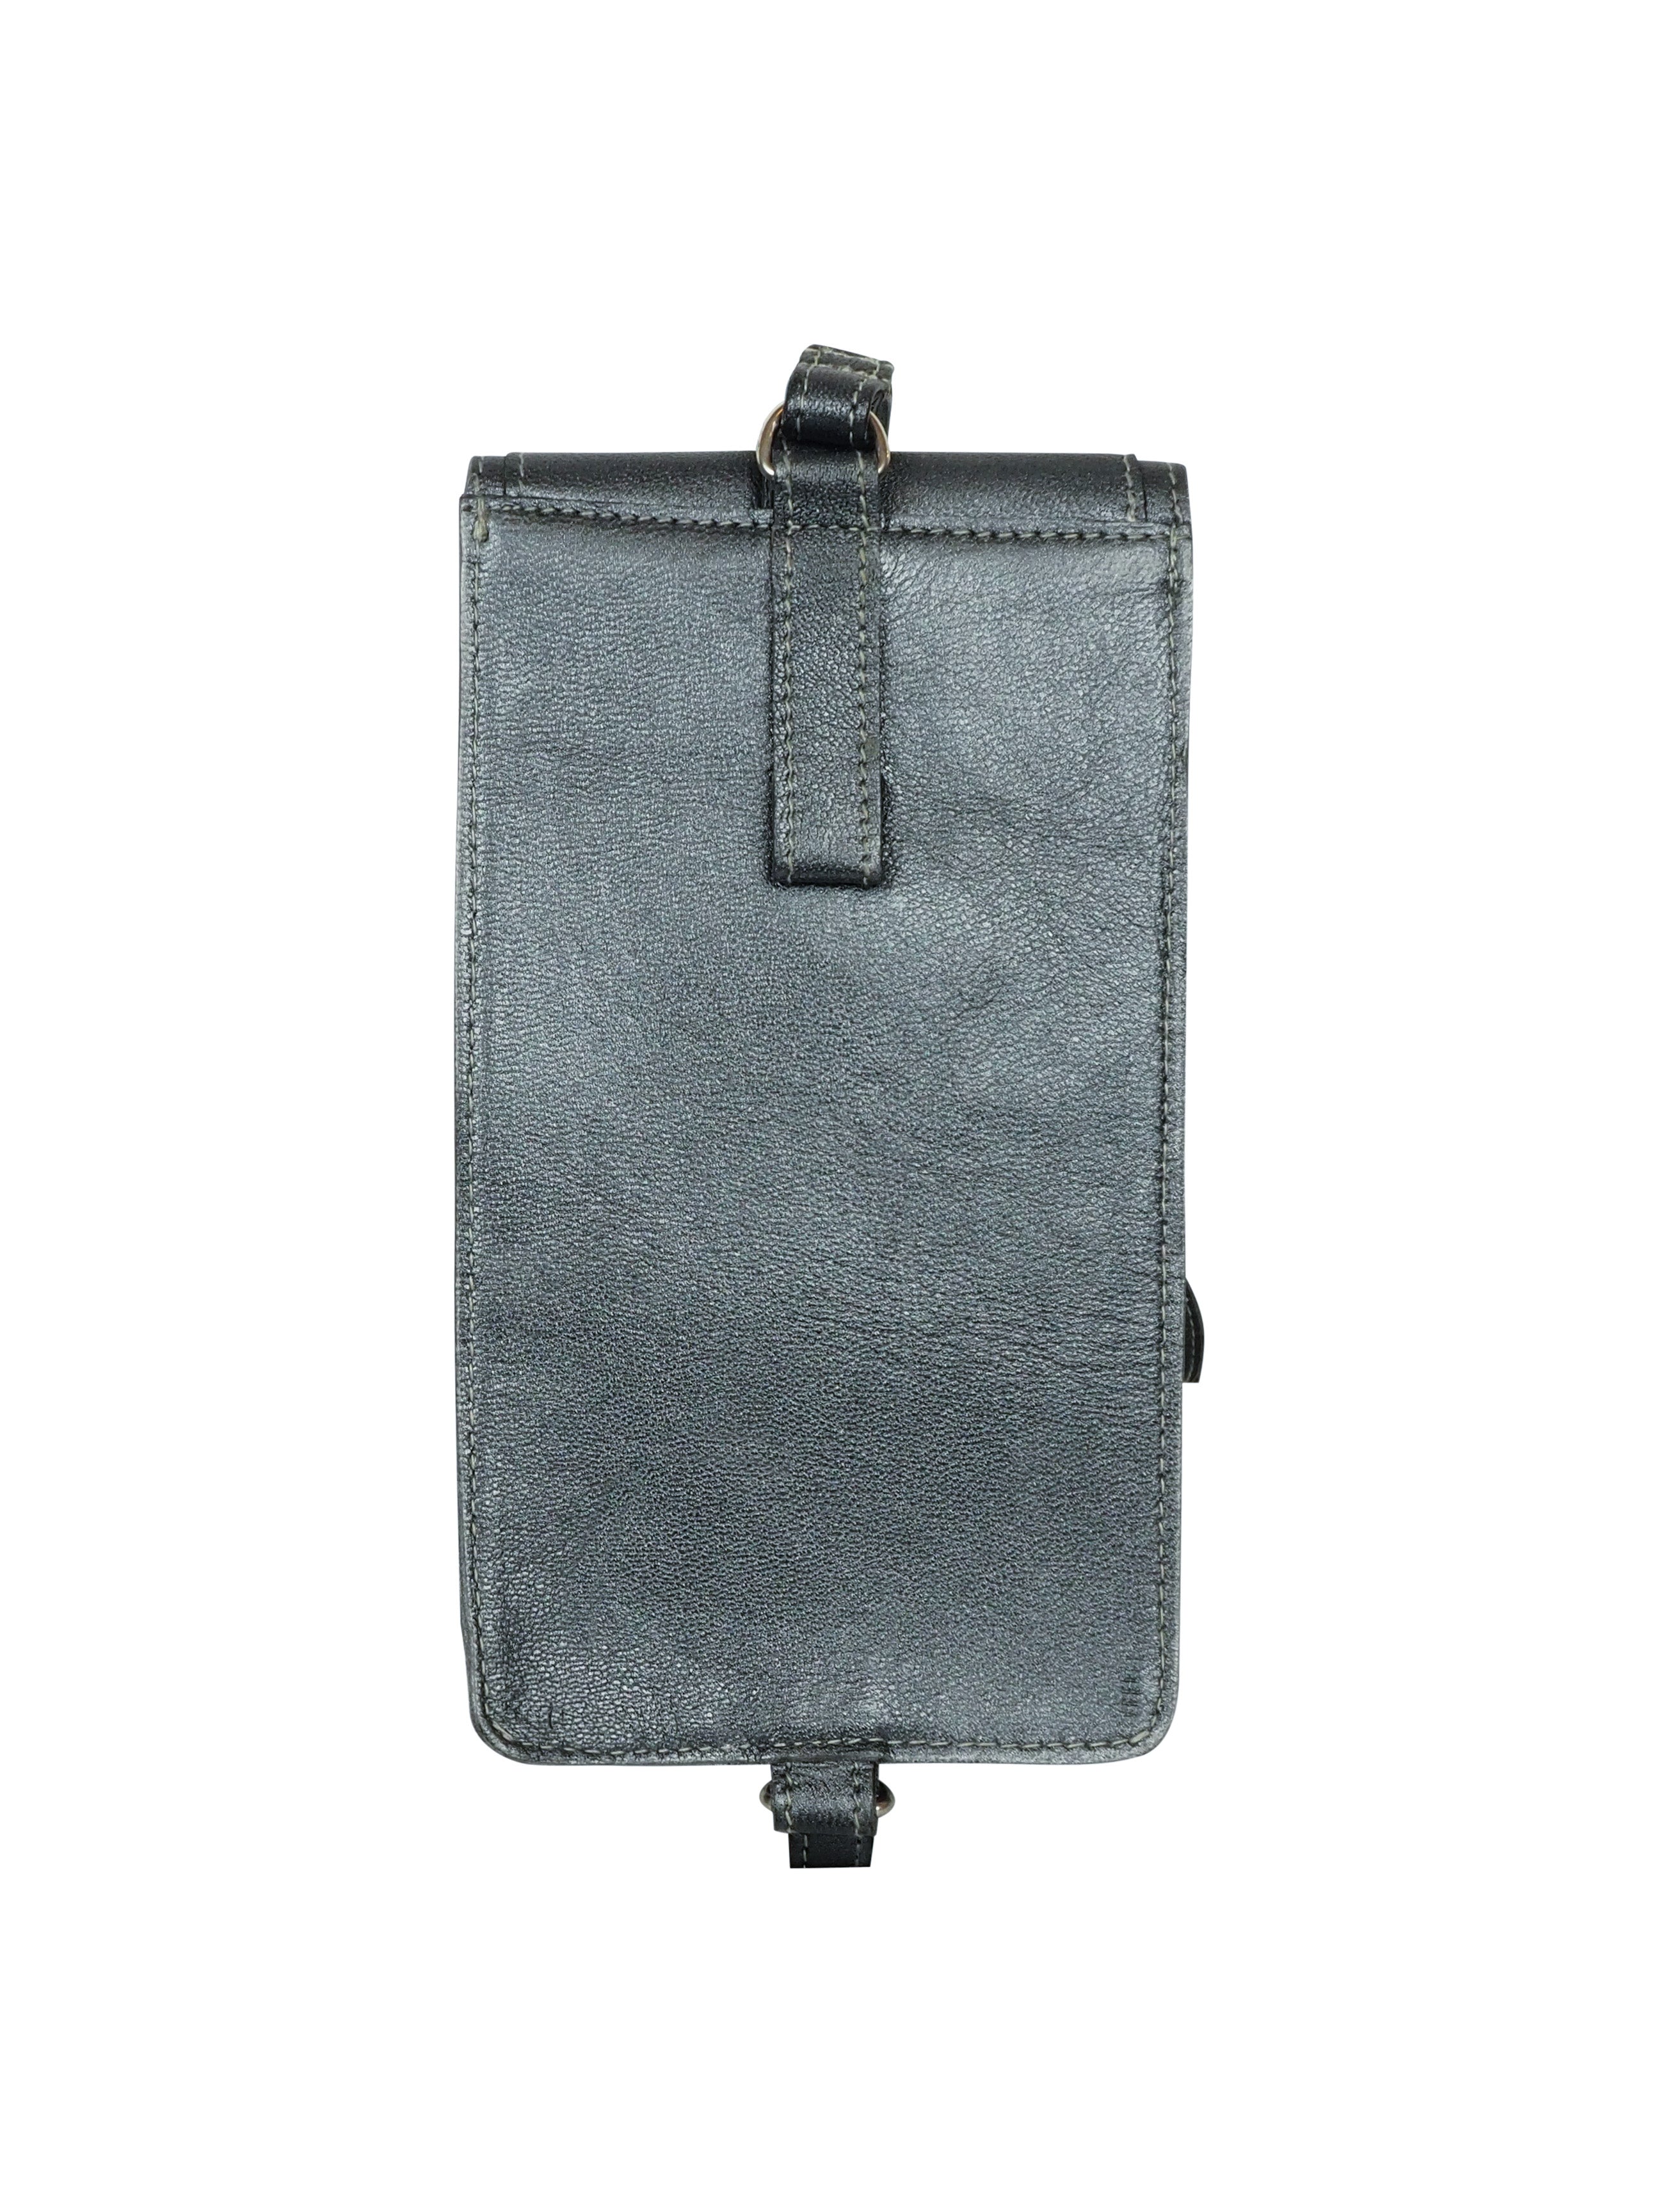 Marina Phone Bag | Pewter Metallic-Handbag & Wallet Accessories-CadelleLeather